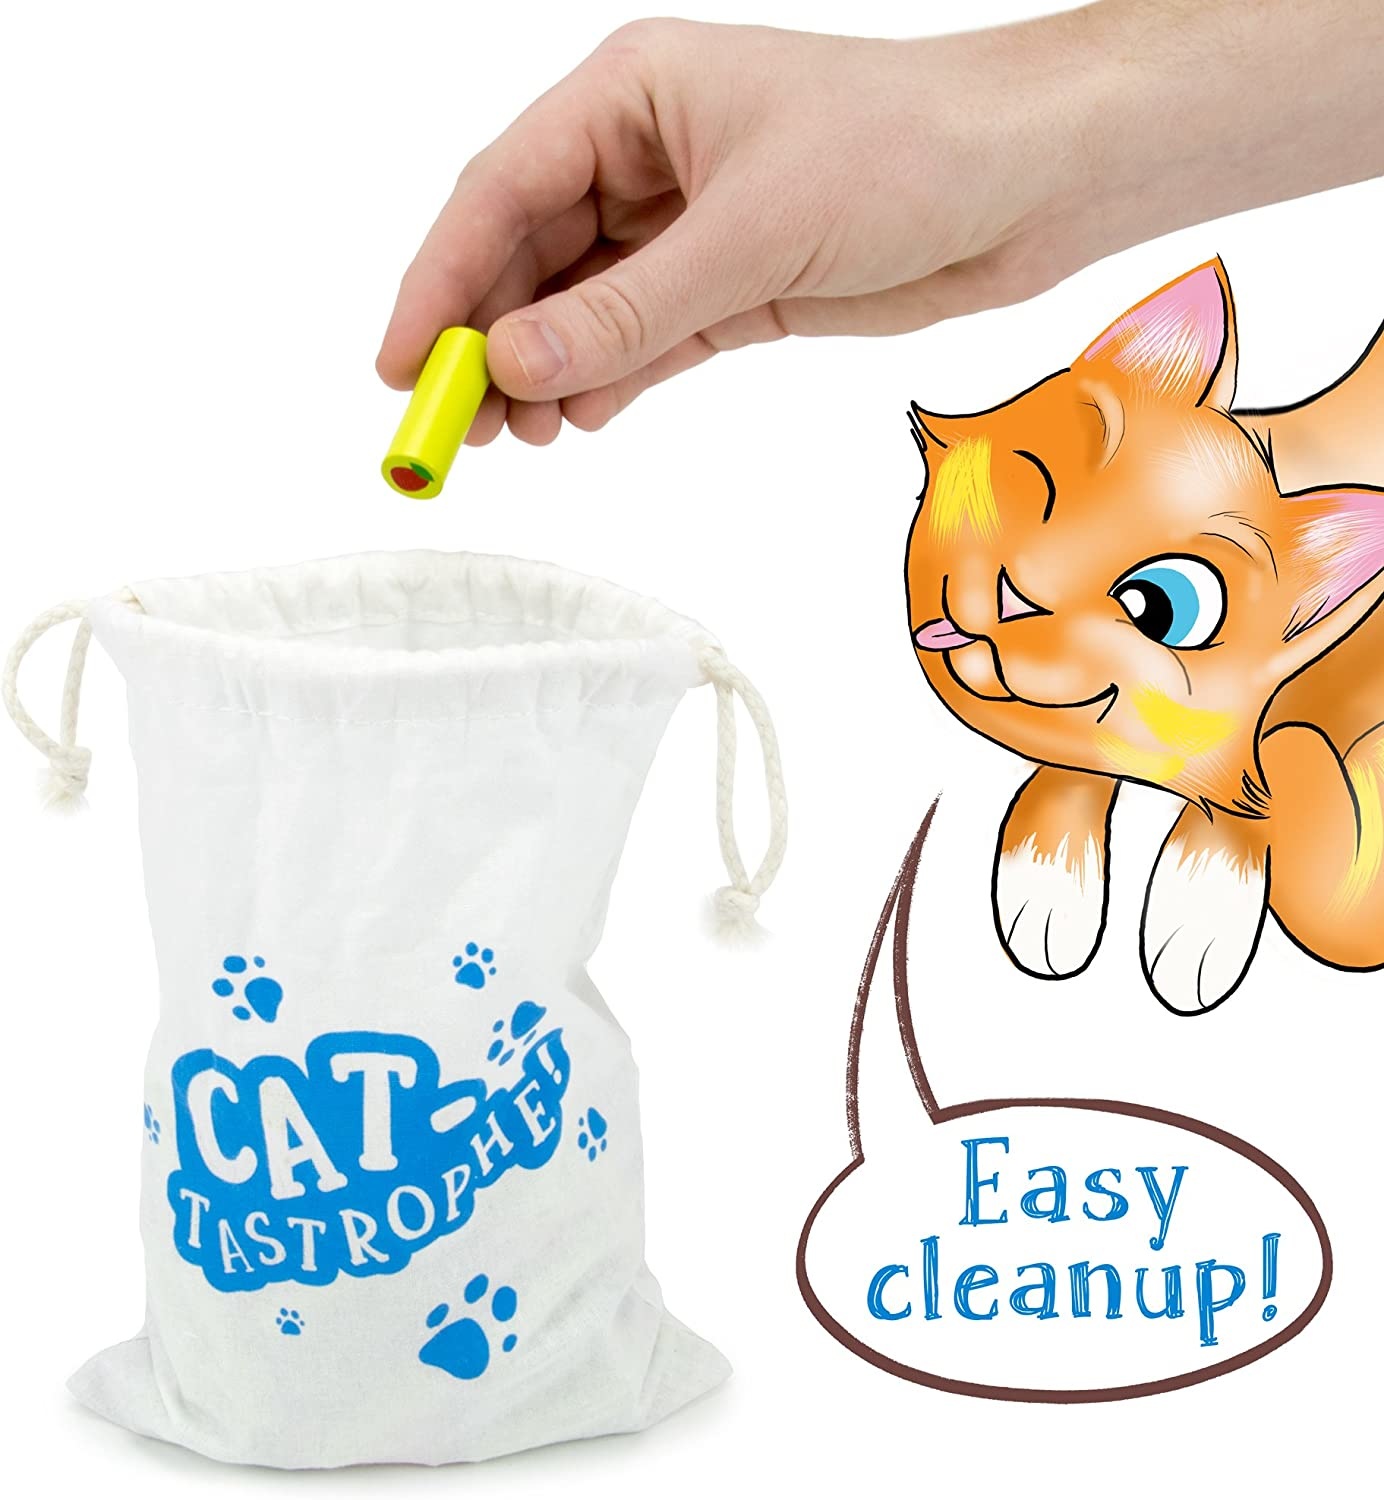 Toys & Games Cat-tastrophe!